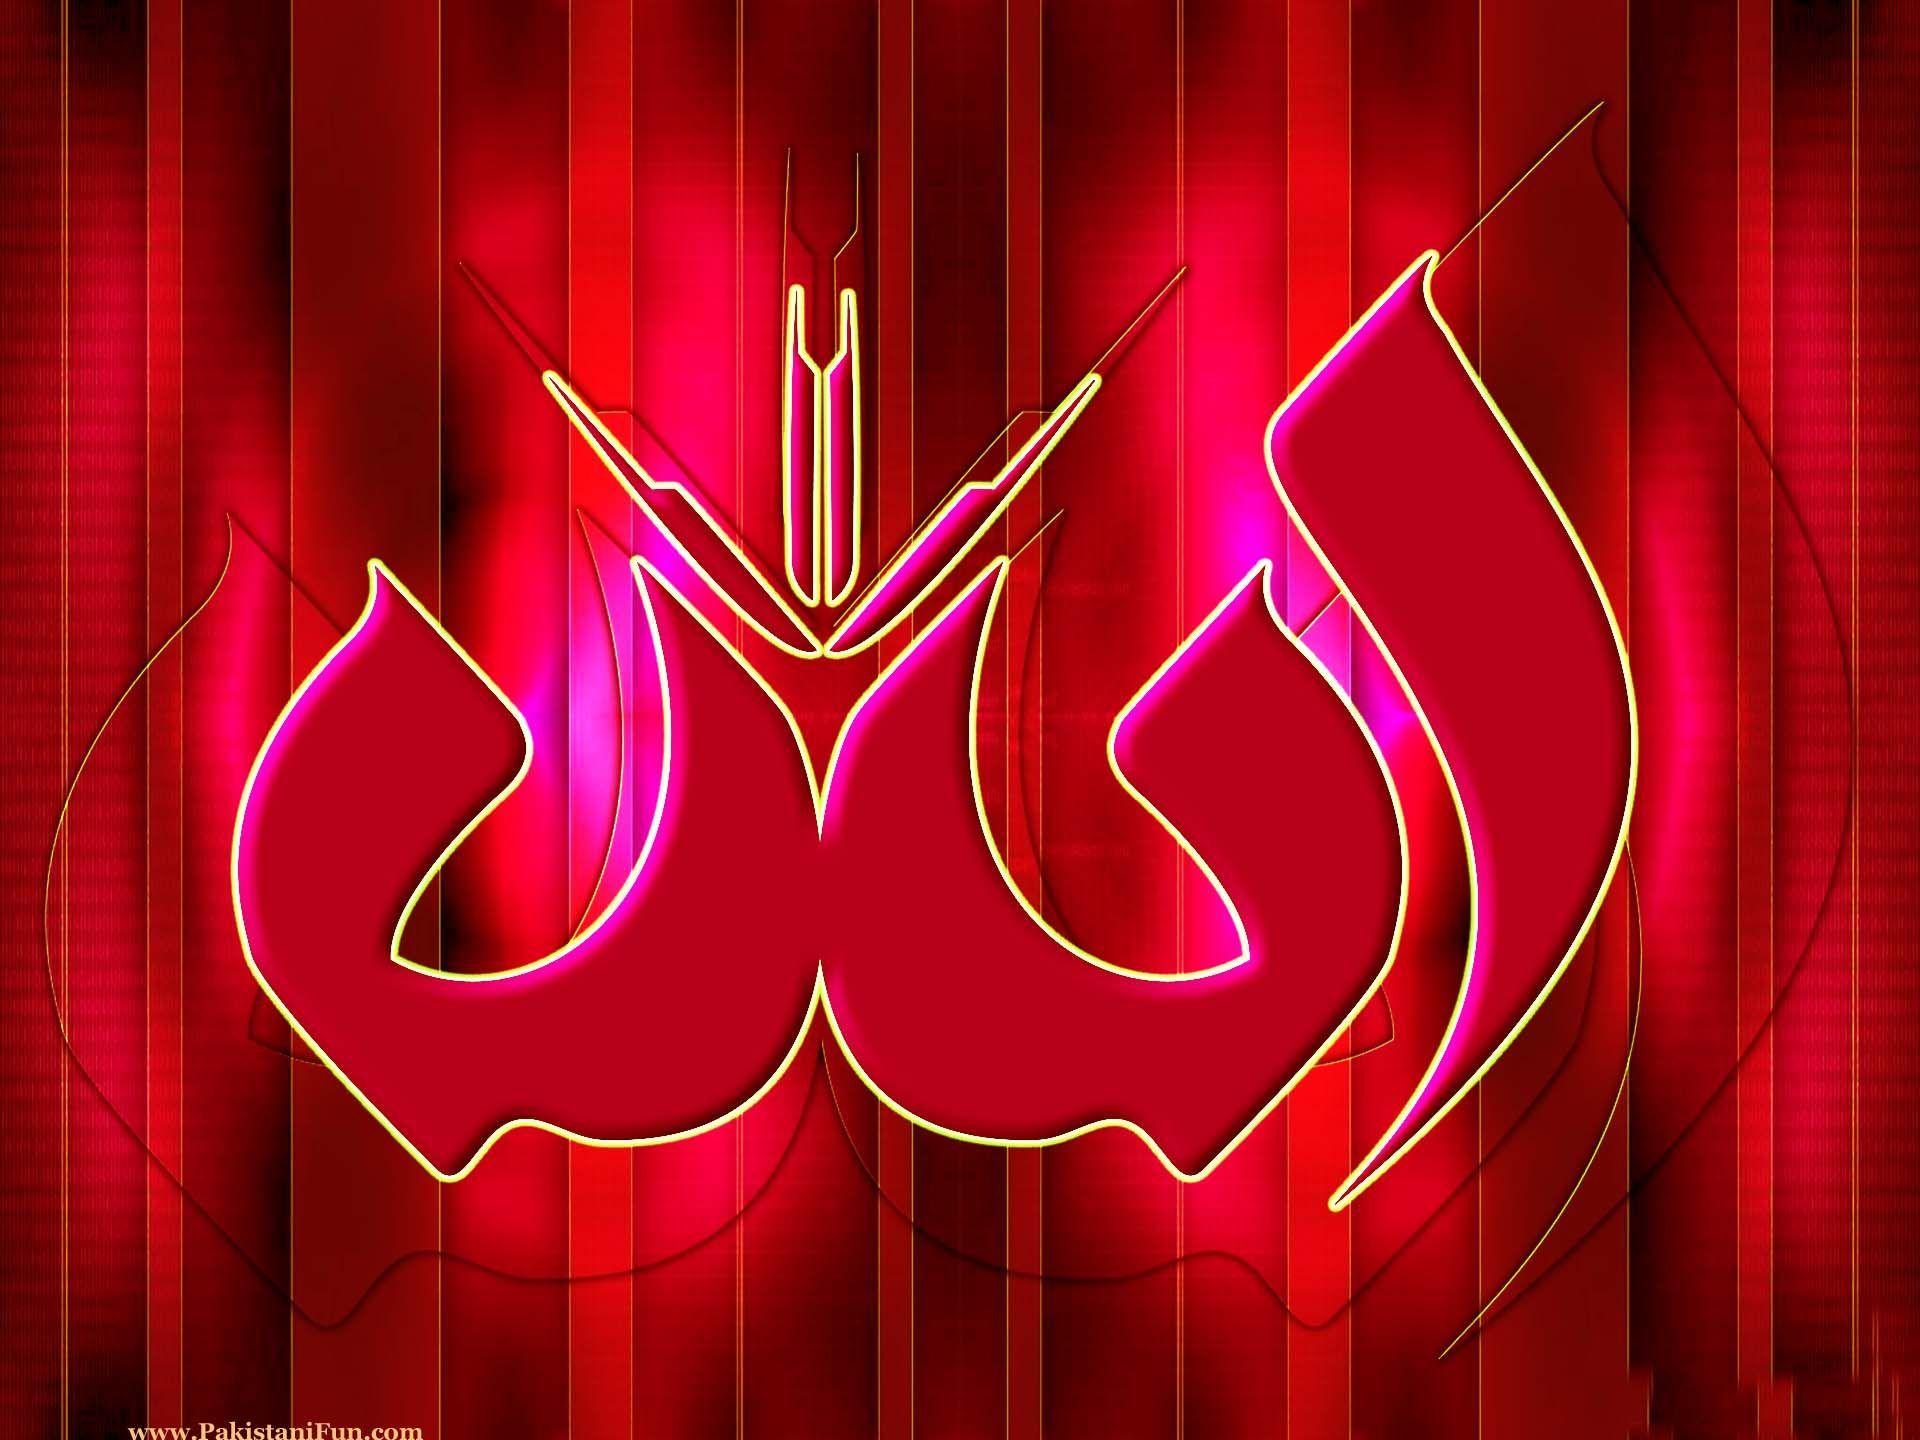 Super Pics: Allah Name Wallpaper, Amazing Allah Name Image. All